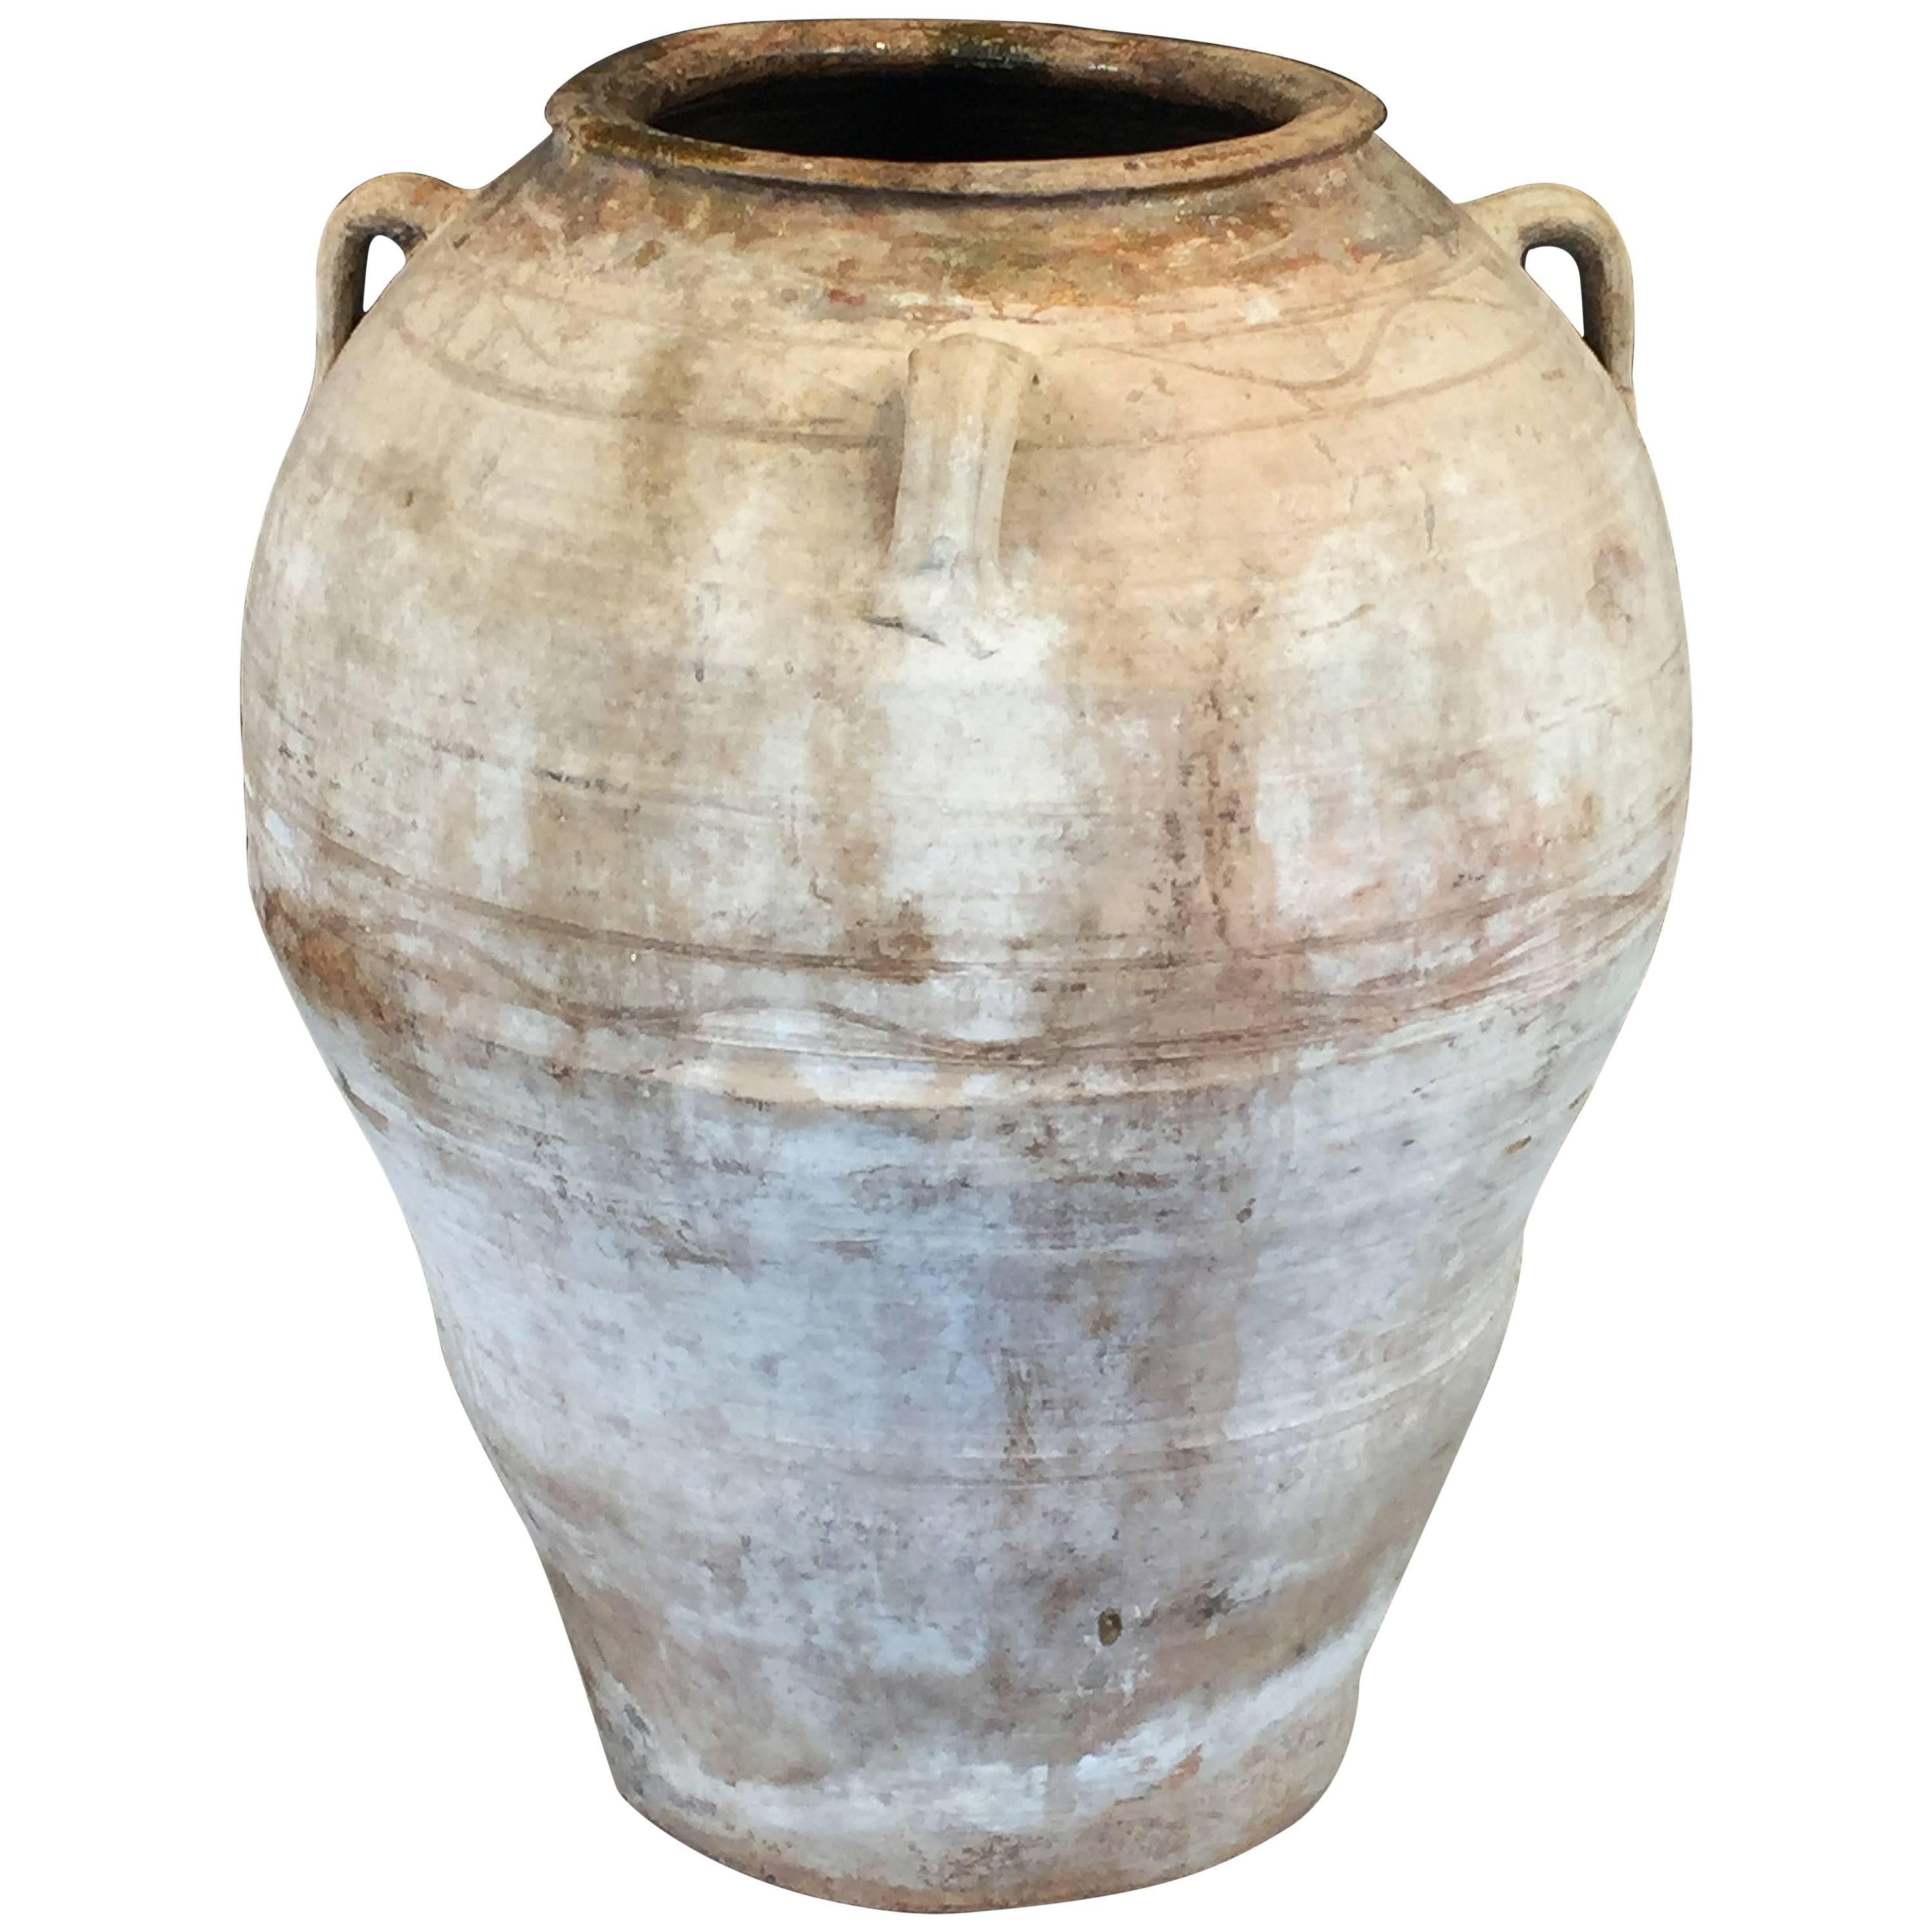 Large Garden Urn or Oil Jar from Spain